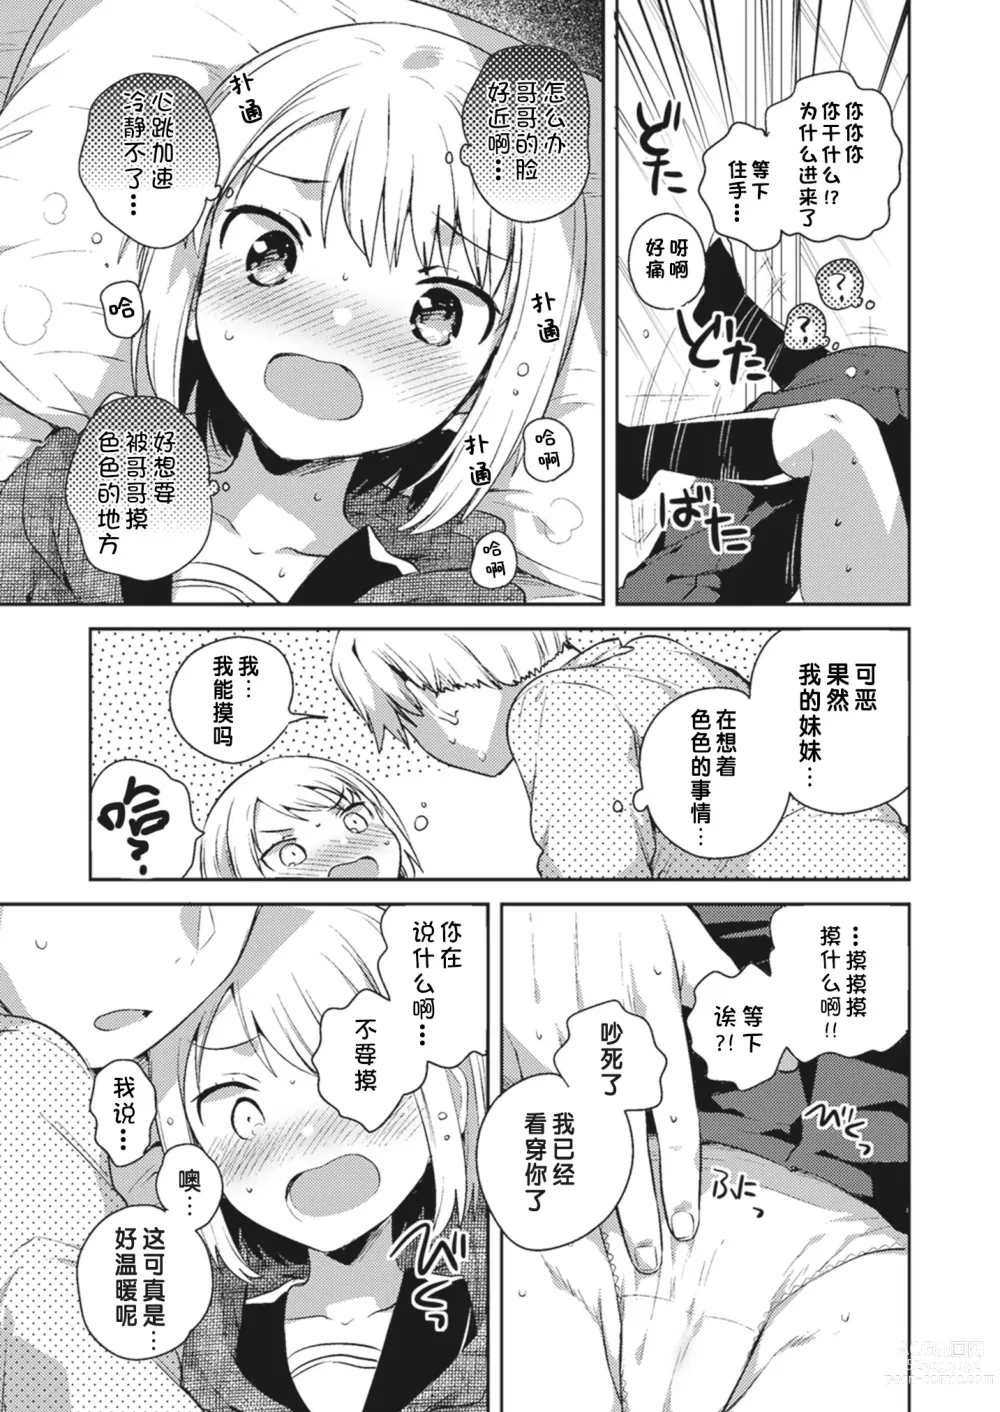 Page 4 of doujinshi 能听见妹妹的心声